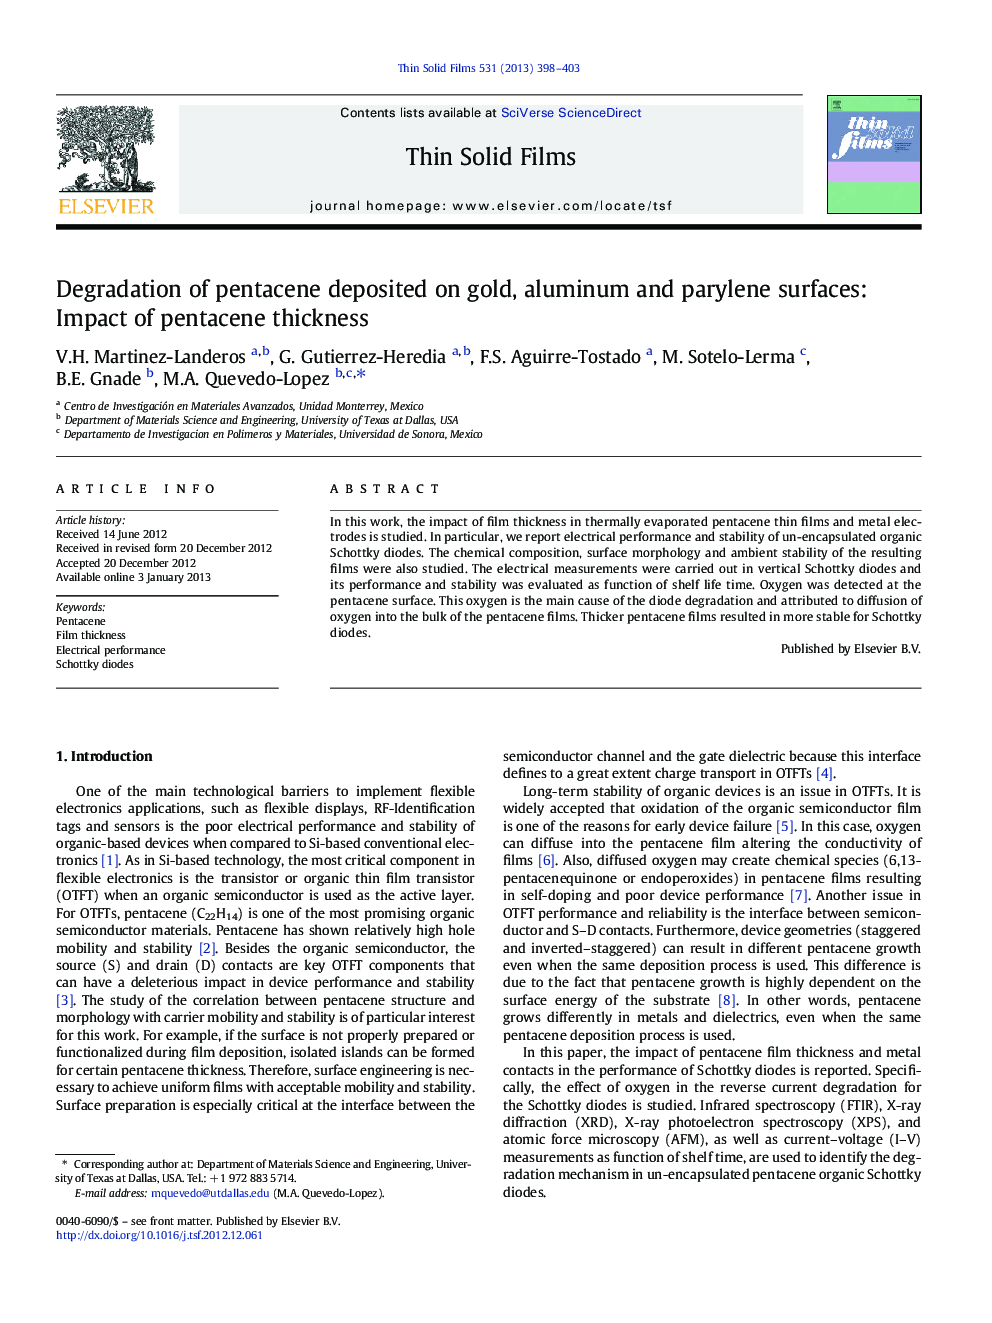 Degradation of pentacene deposited on gold, aluminum and parylene surfaces: Impact of pentacene thickness